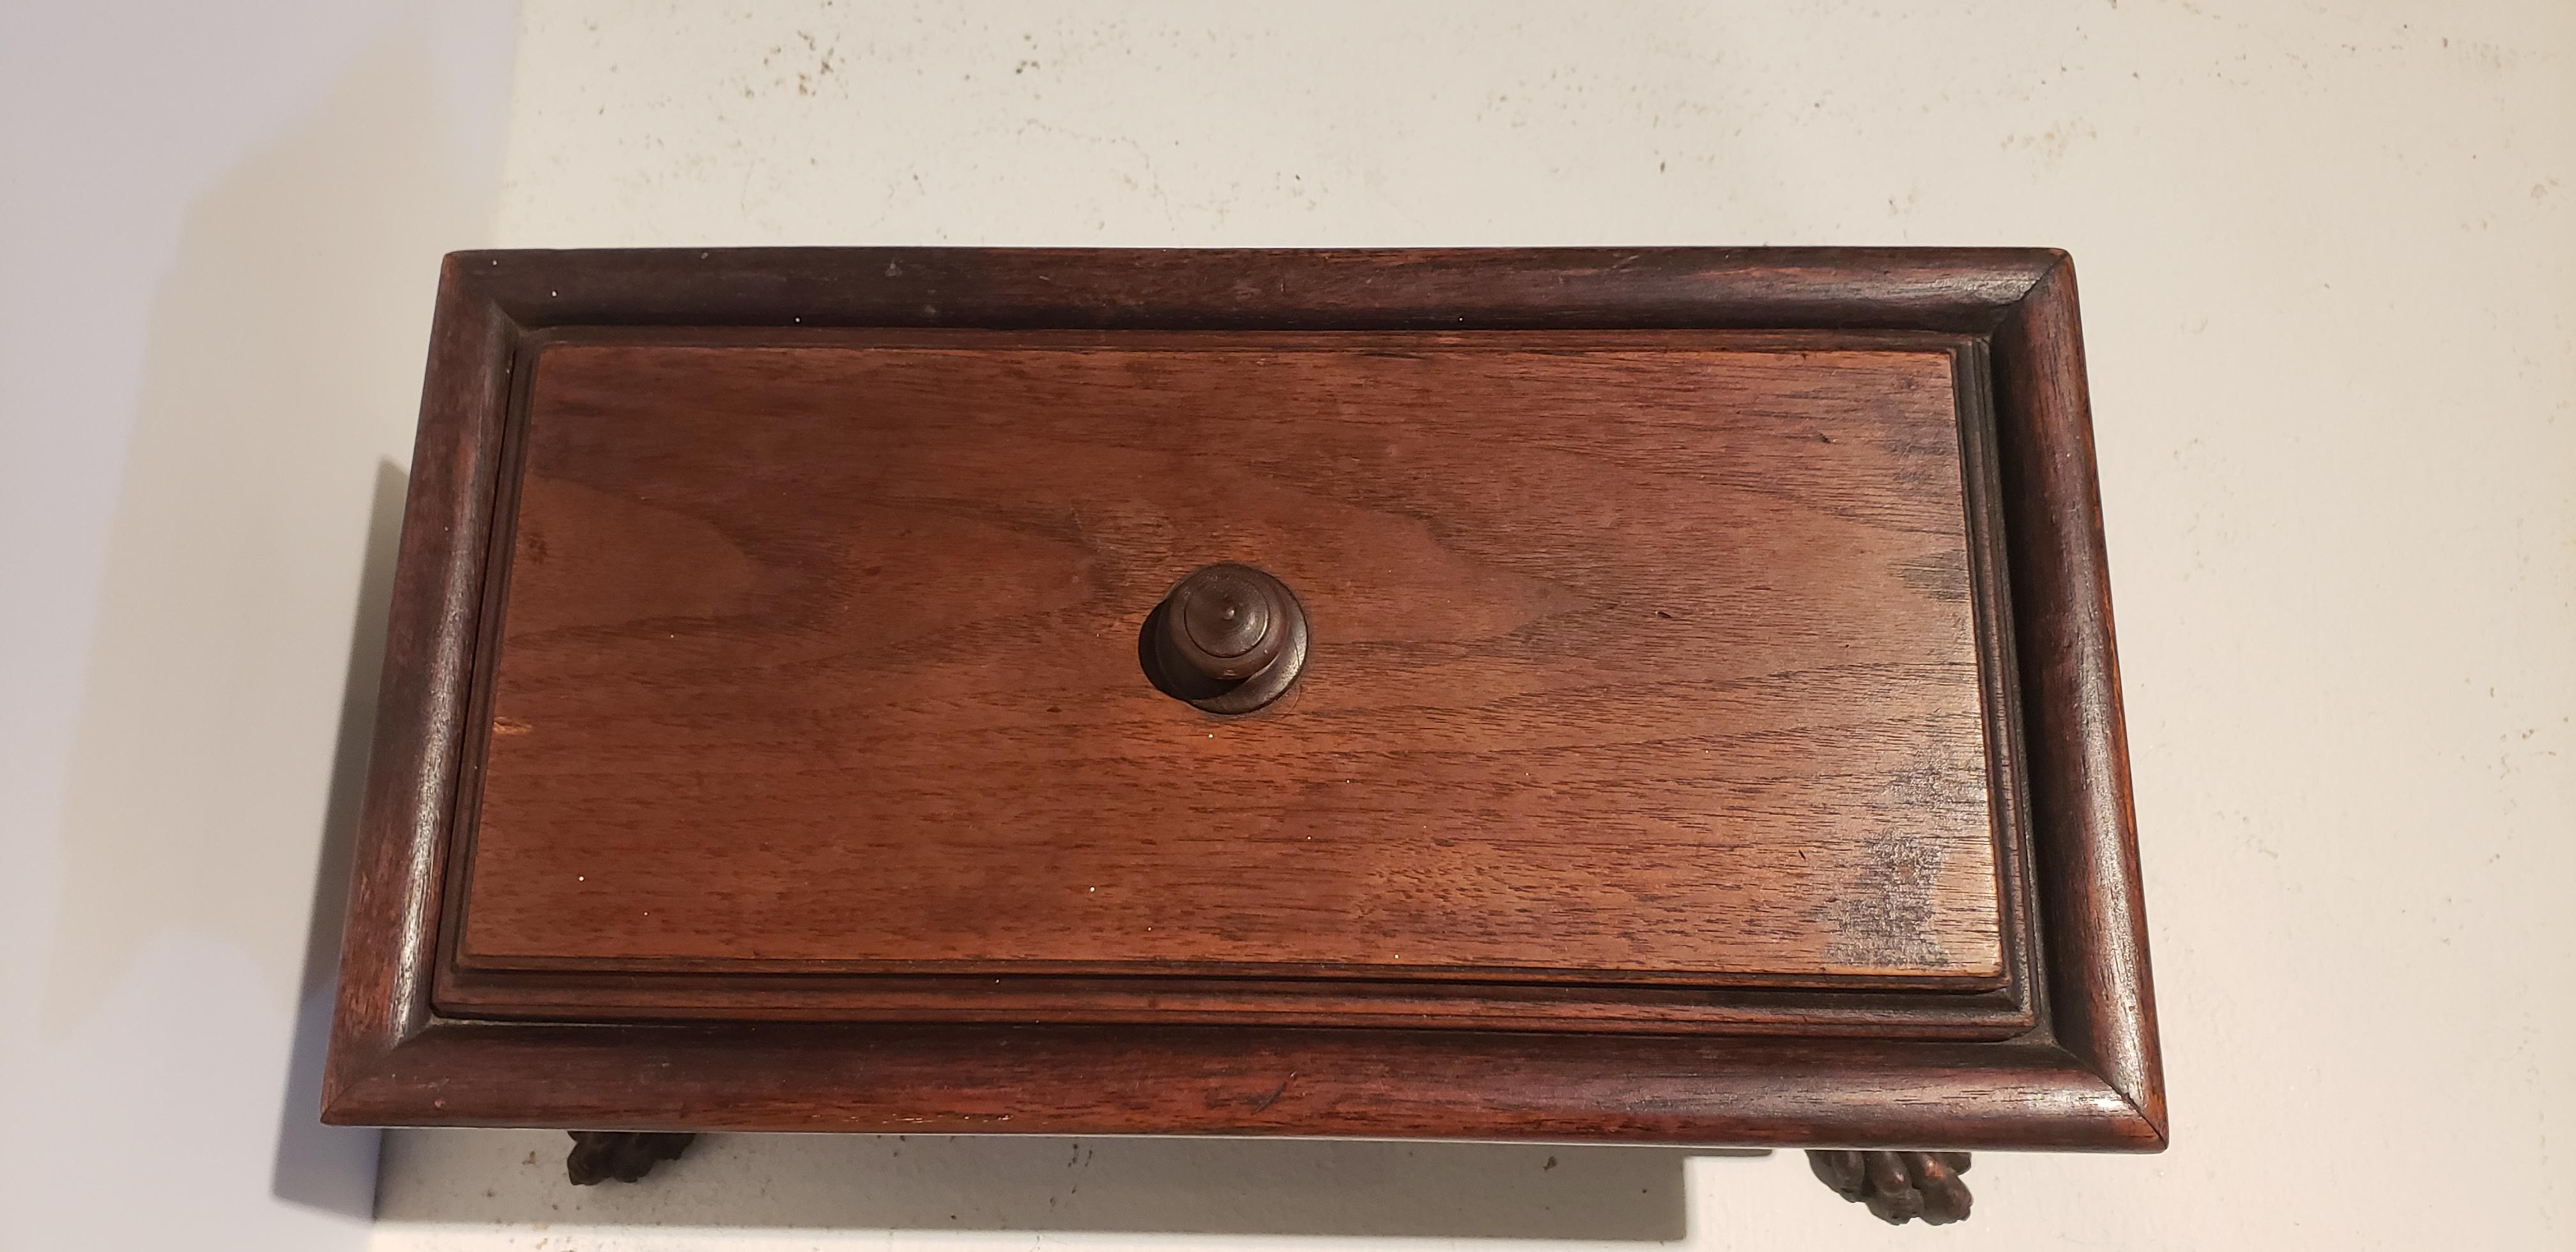 Renaissance Revival Wooden Desk Top or Jewelry Box in Walnut 3